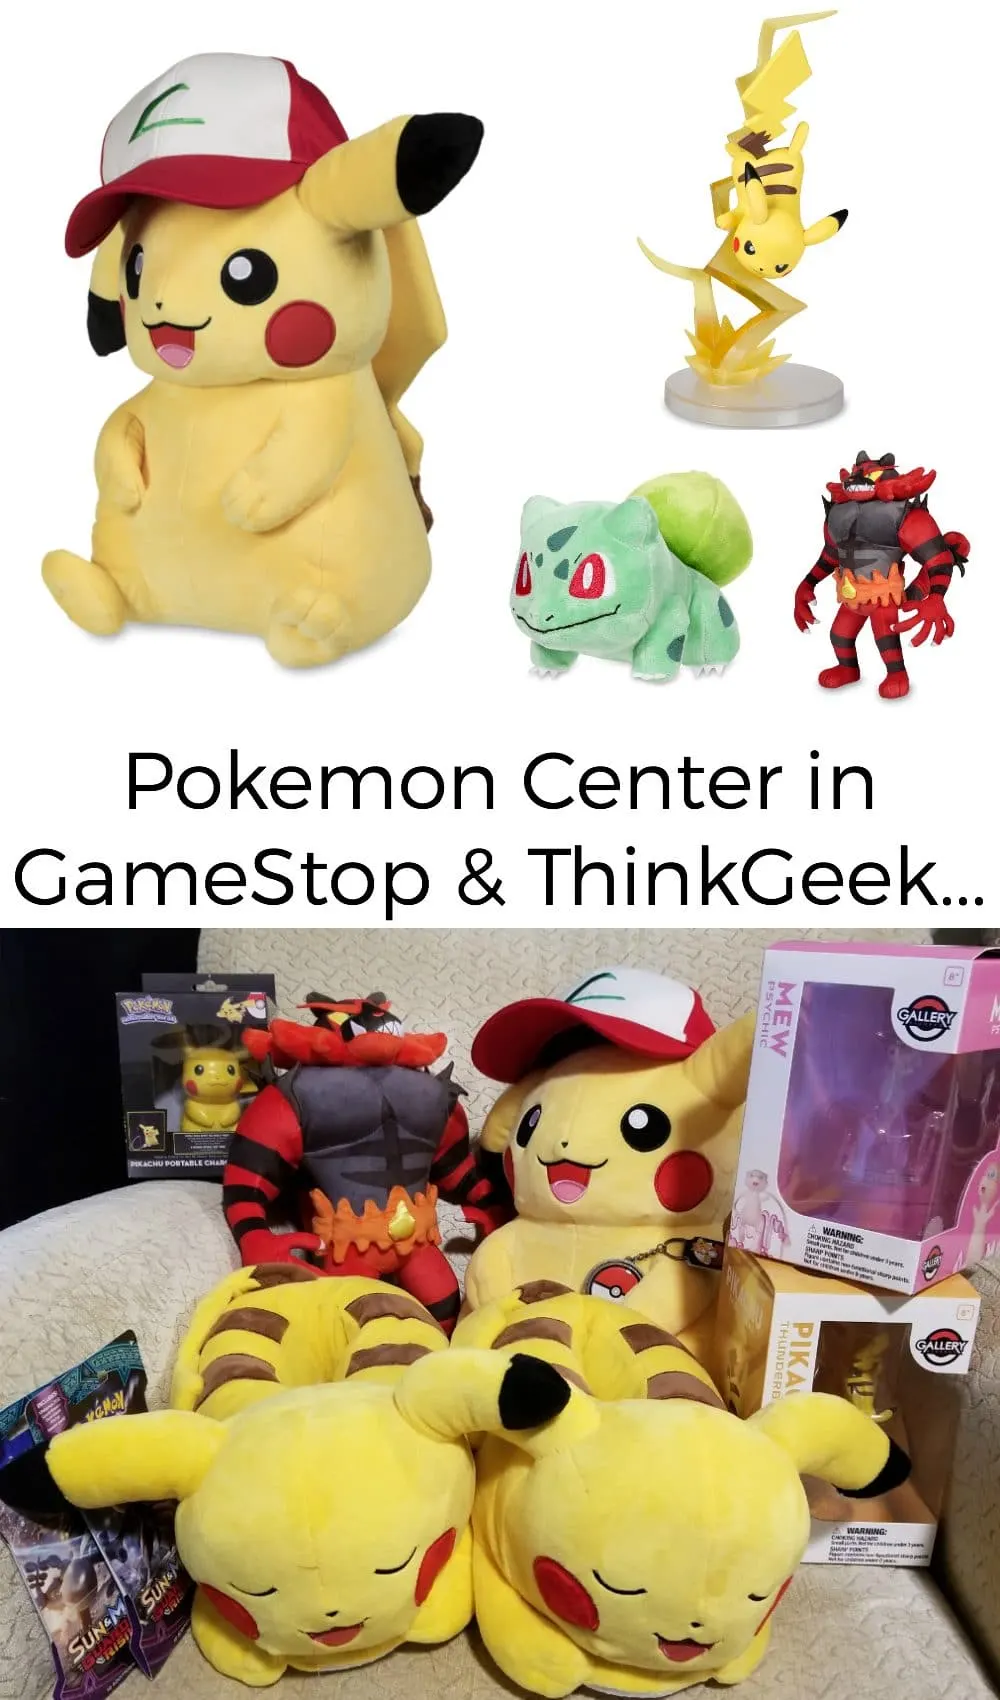 Pokemon toys and stuffed animals at Gamestop. 